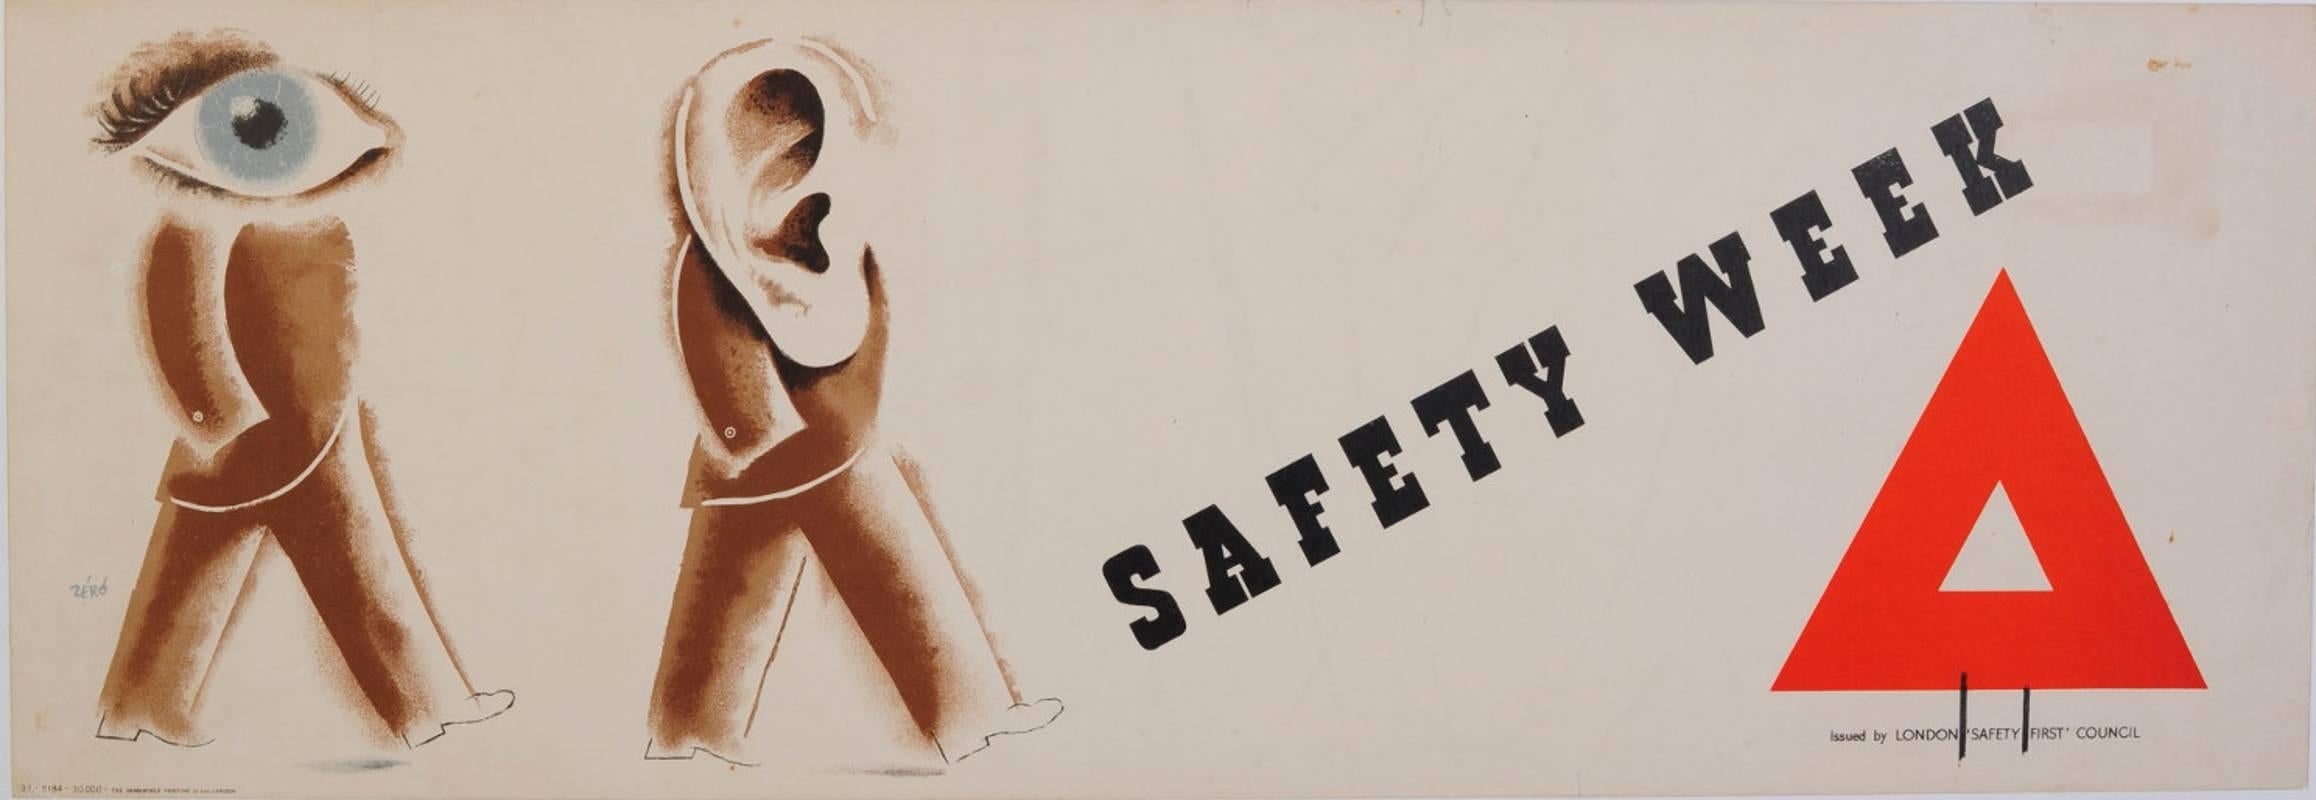 Hans Schleger Zero Print - 'Zero' Hans Schleger Surreal Original Vintage Poster 'Safety Week' Eyes and Ears